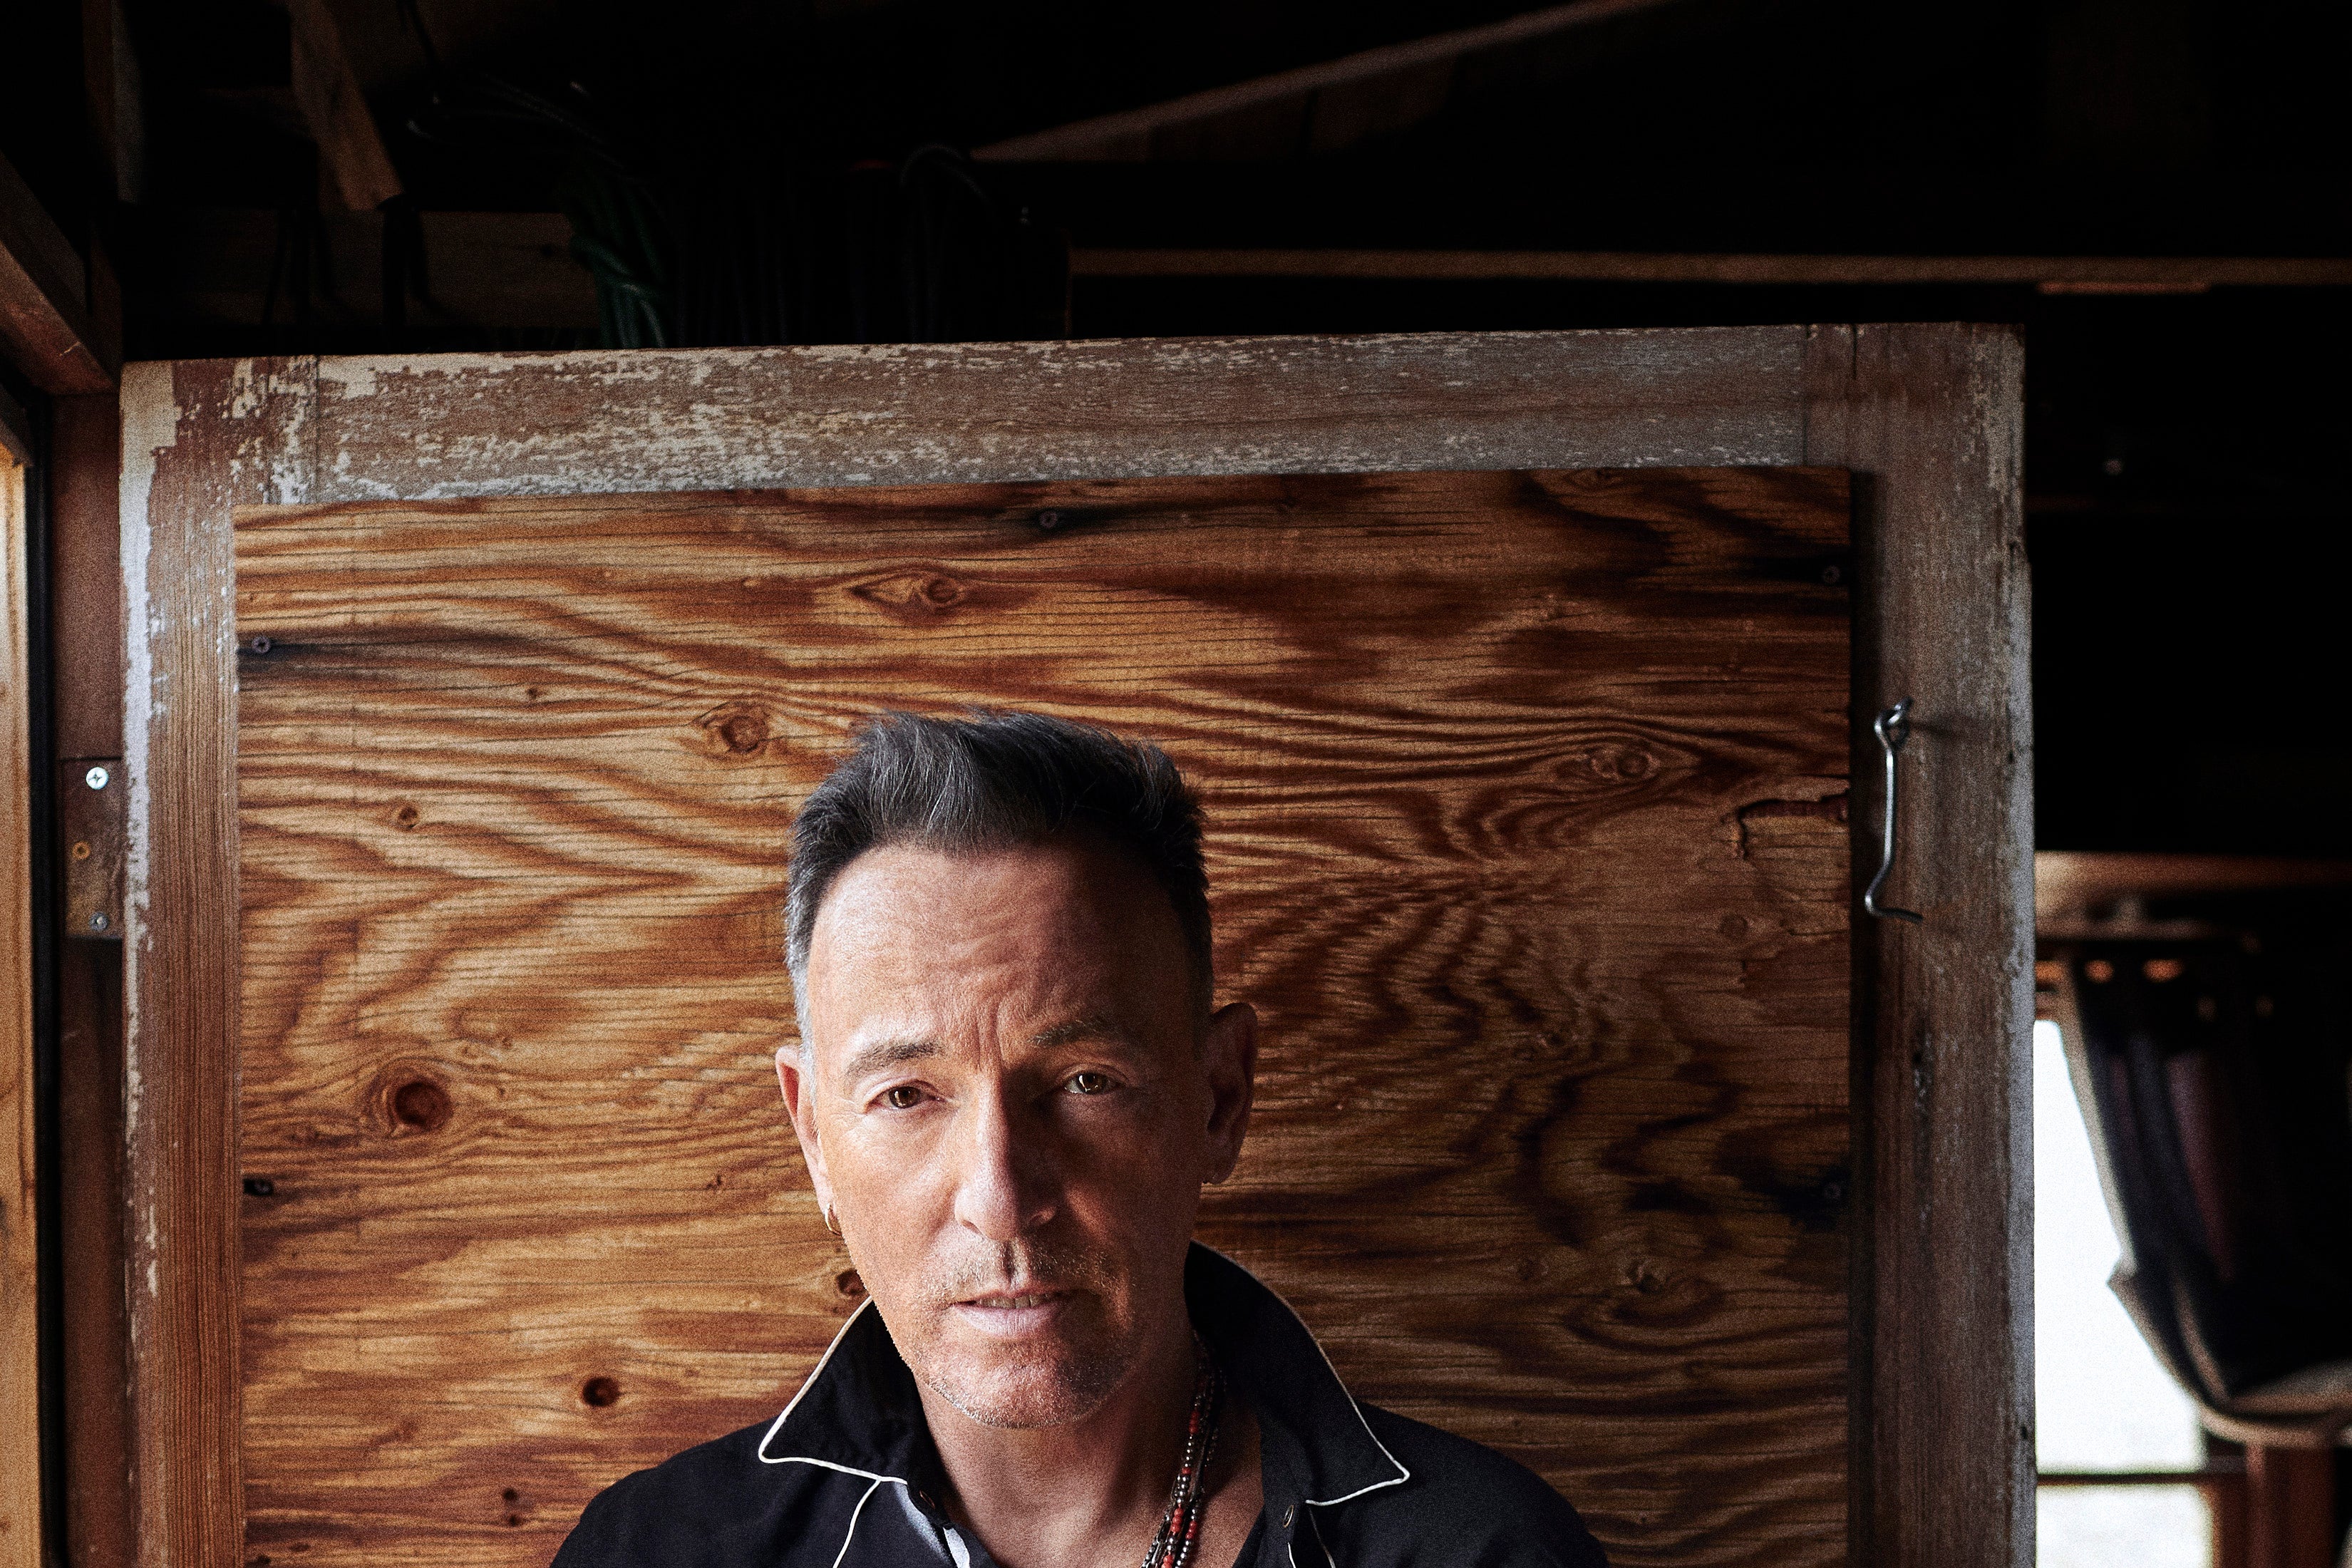 Bruce Springsteen, who must be reeling